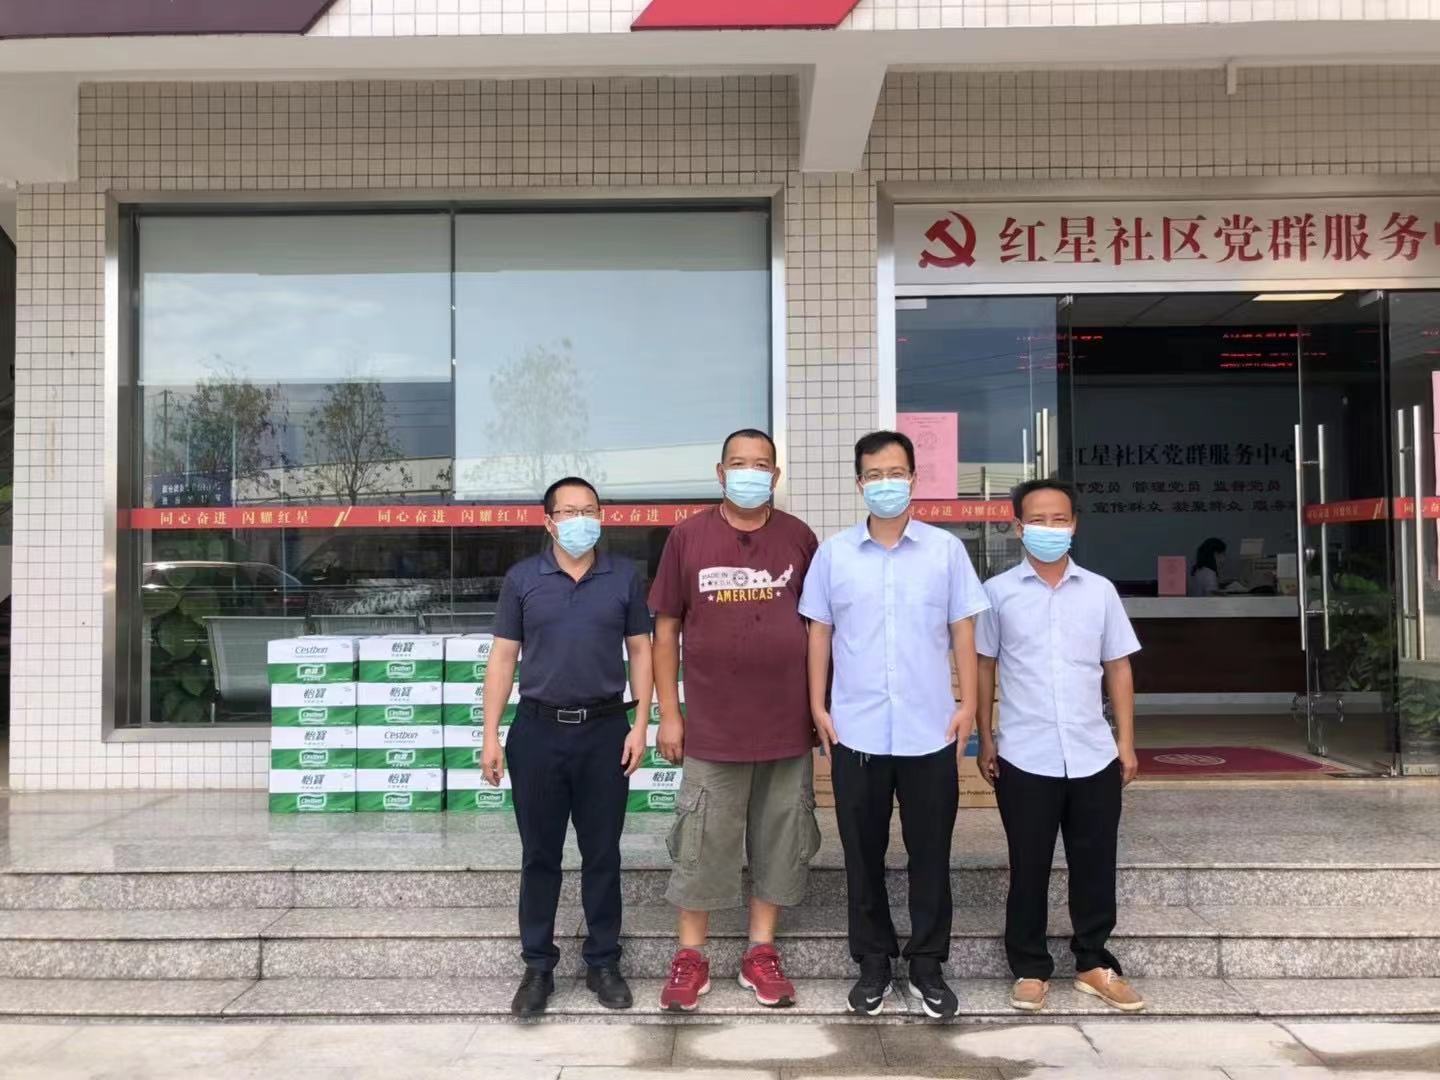 Rayson Company combatte l'epidemia insieme a tutte le persone a Nanhai